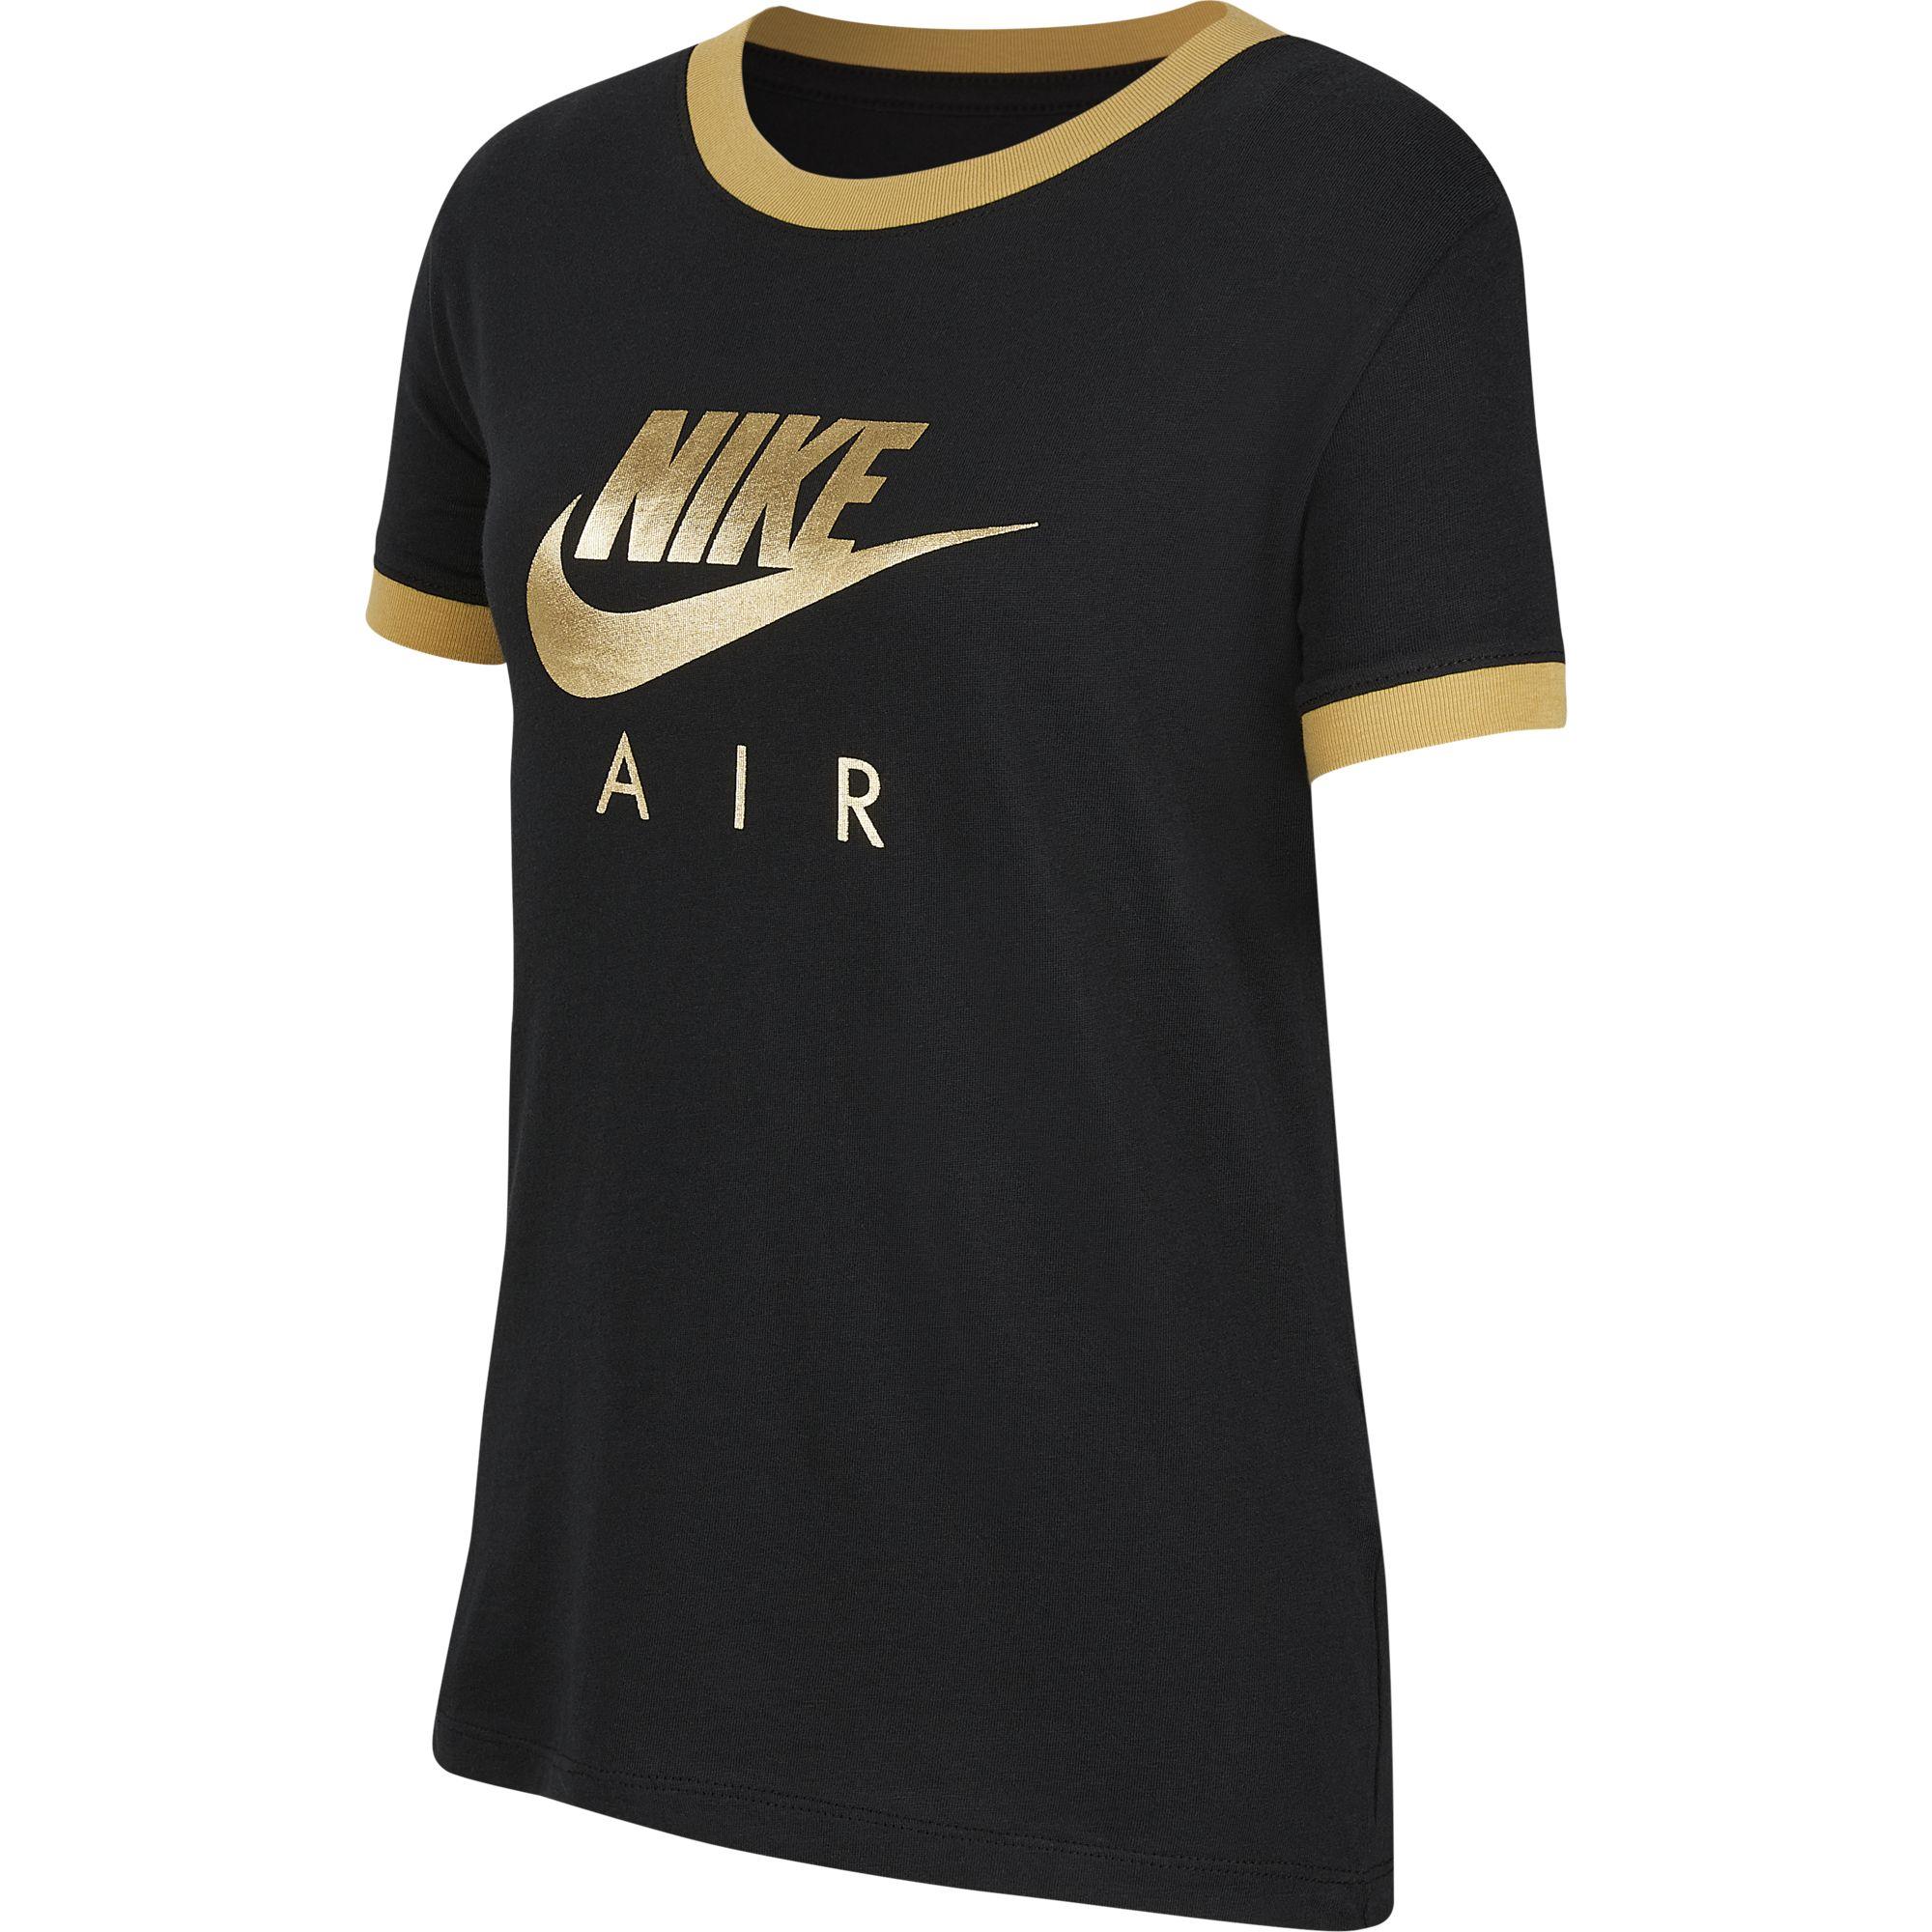 nike t shirt gold logo